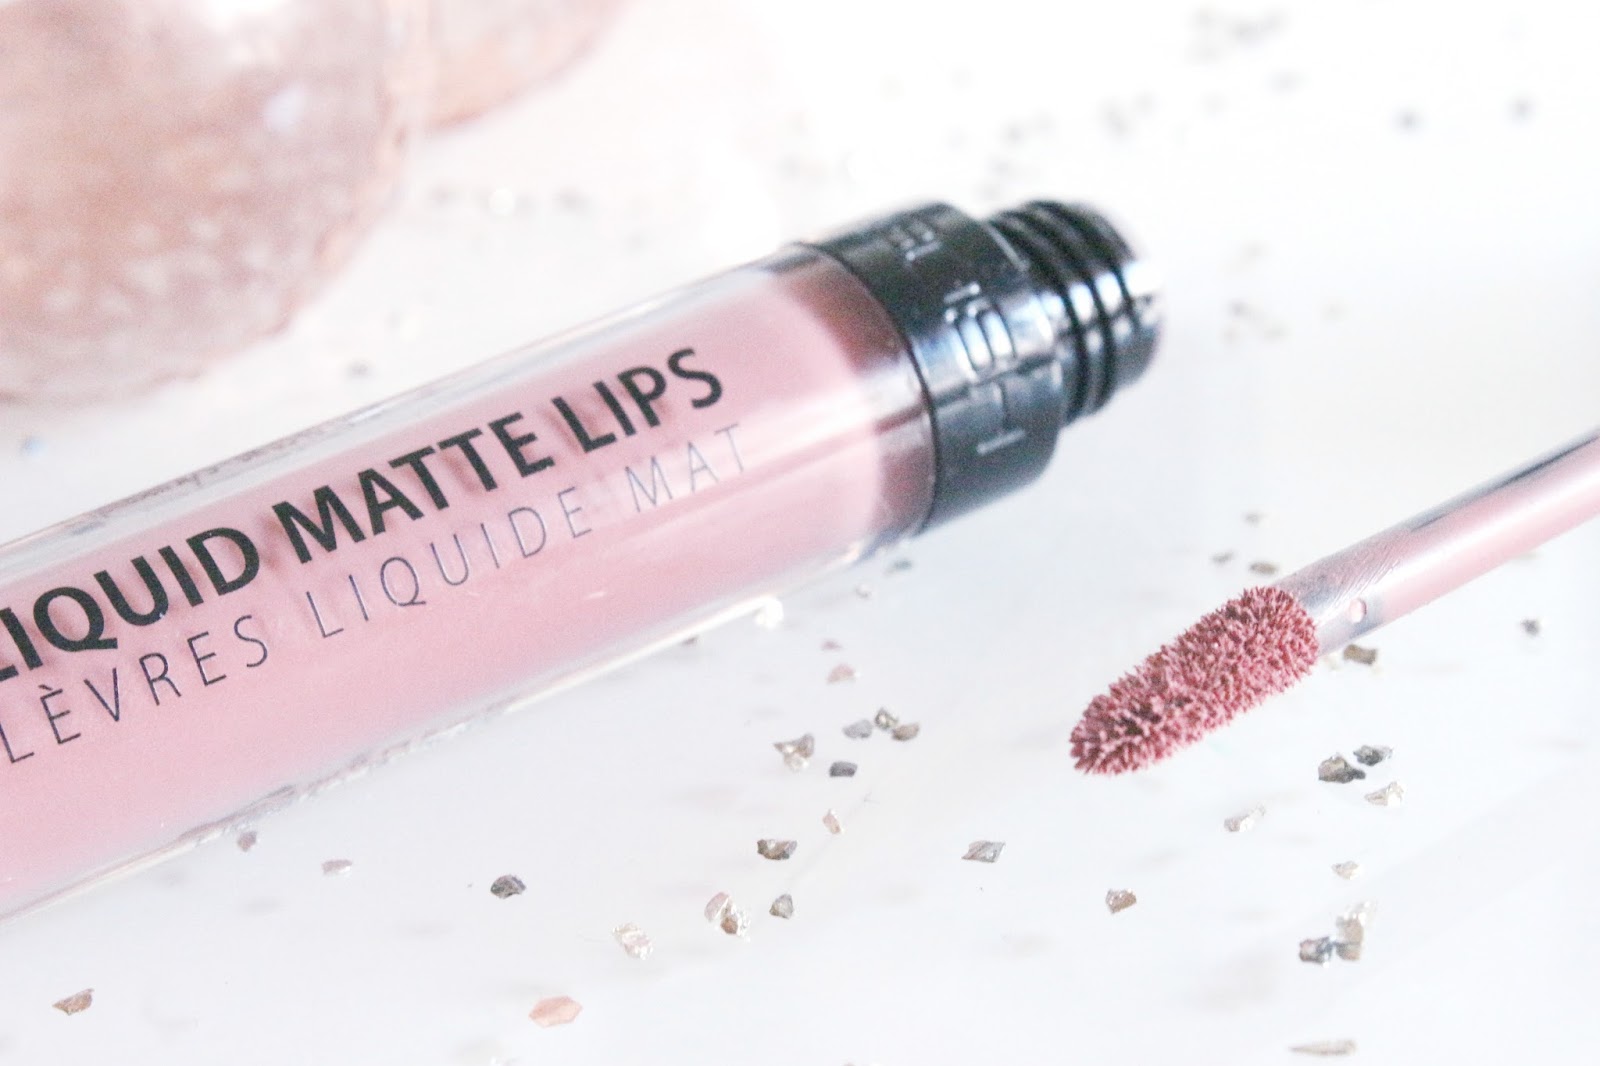 liquid-matte-lips